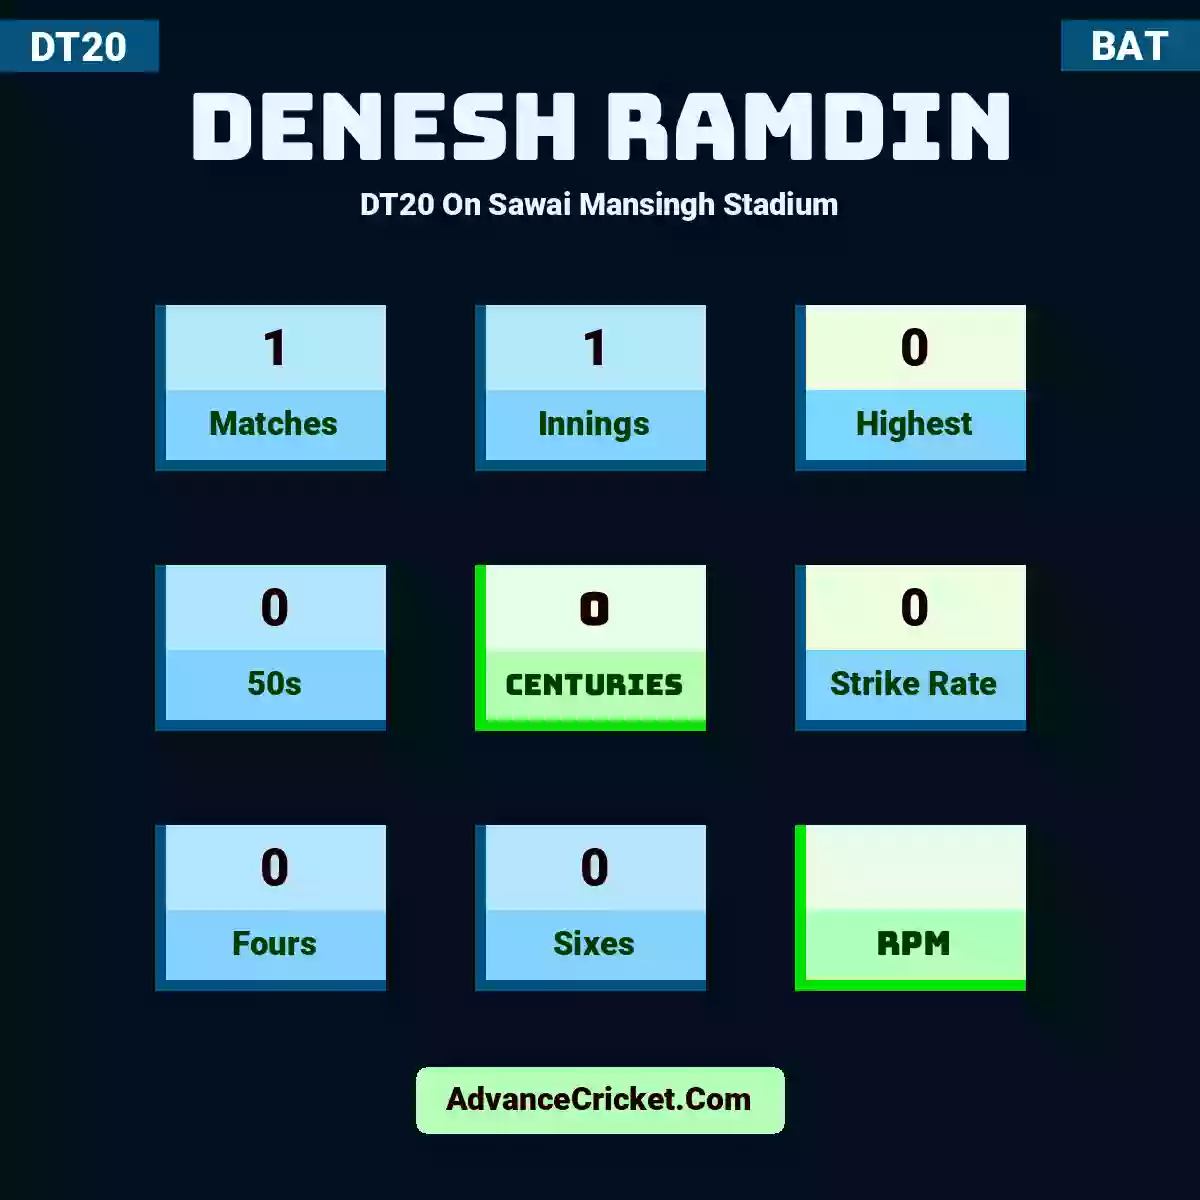 Denesh Ramdin DT20  On Sawai Mansingh Stadium, Denesh Ramdin played 1 matches, scored 0 runs as highest, 0 half-centuries, and 0 centuries, with a strike rate of 0. D.Ramdin hit 0 fours and 0 sixes.